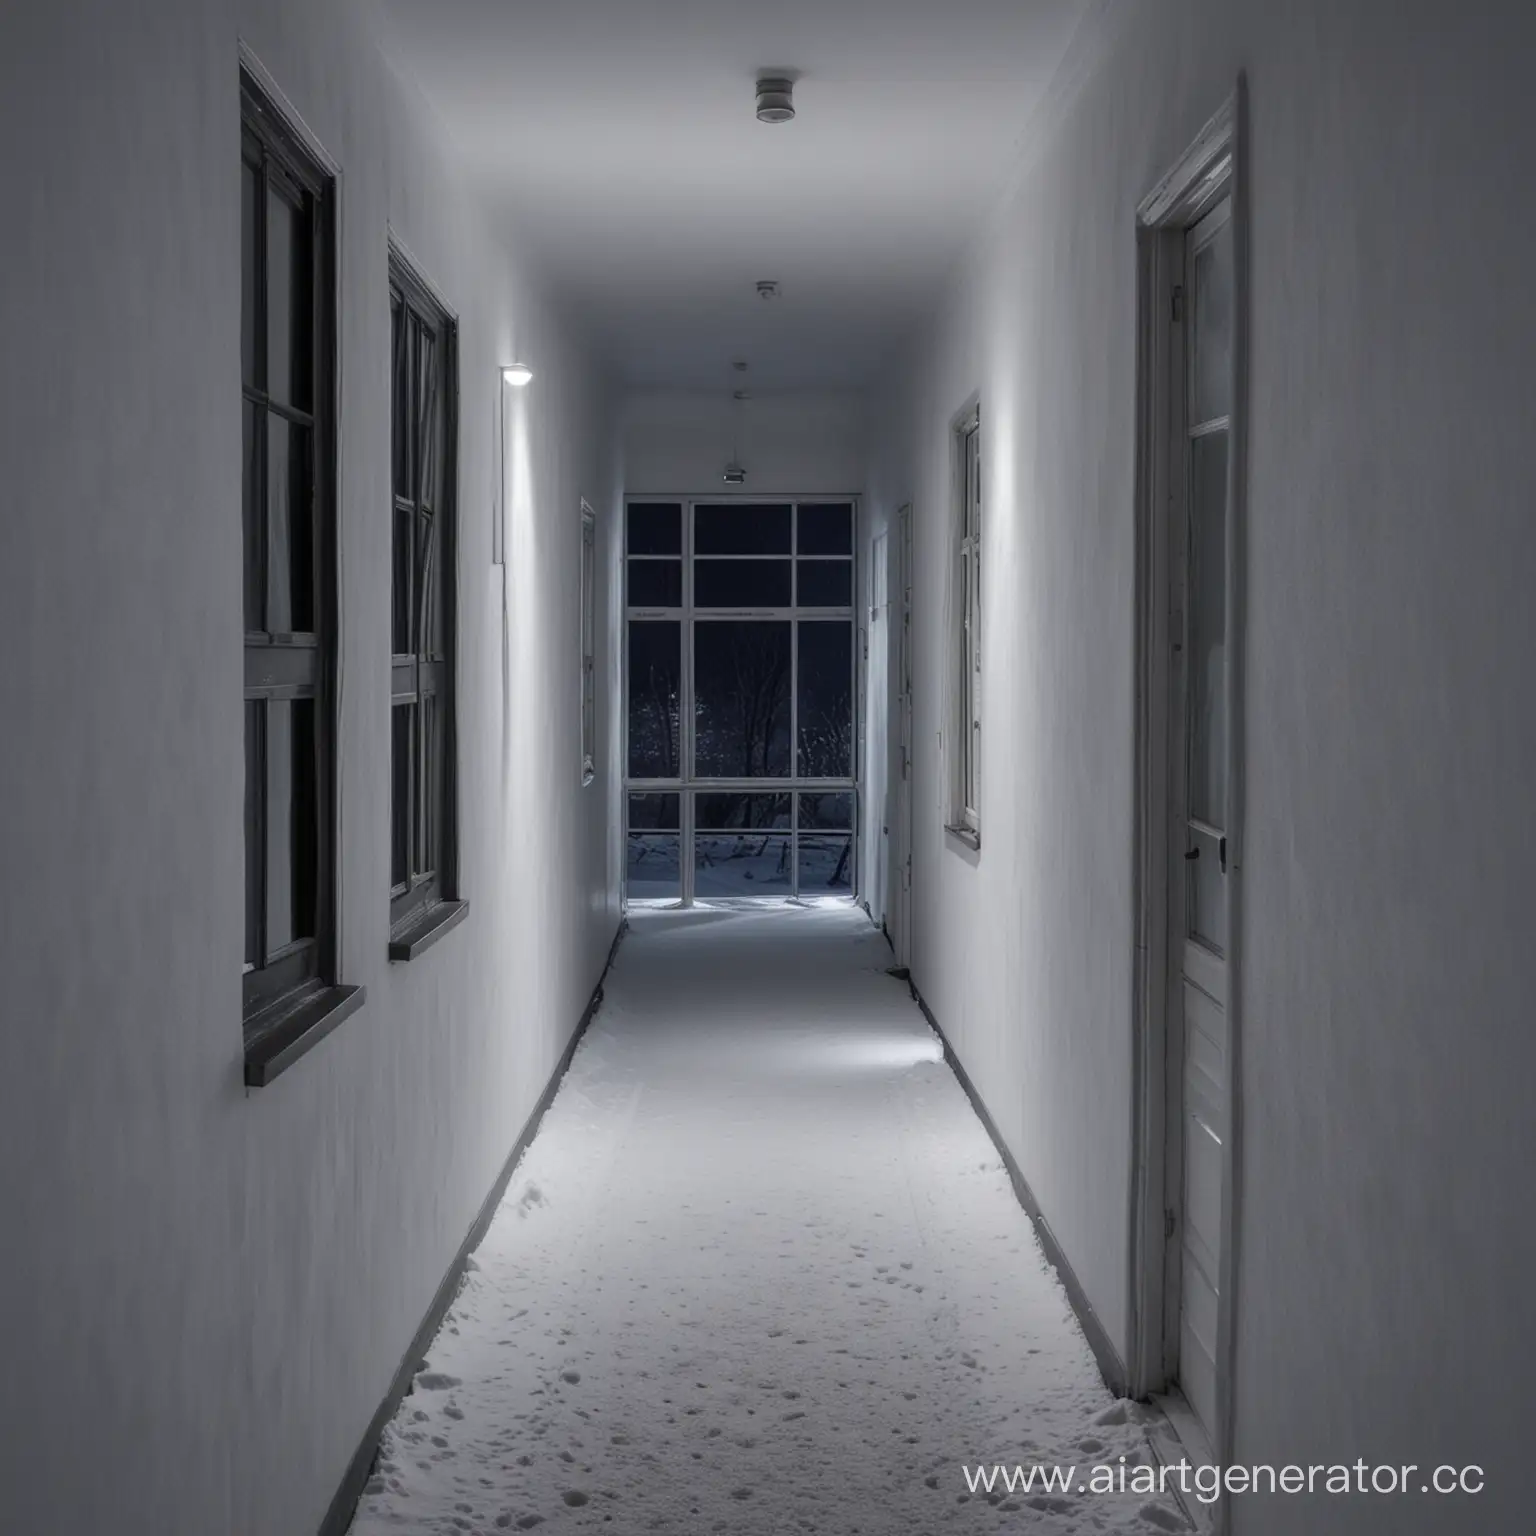 Nighttime-Winter-Scene-Through-a-Corridor-Window